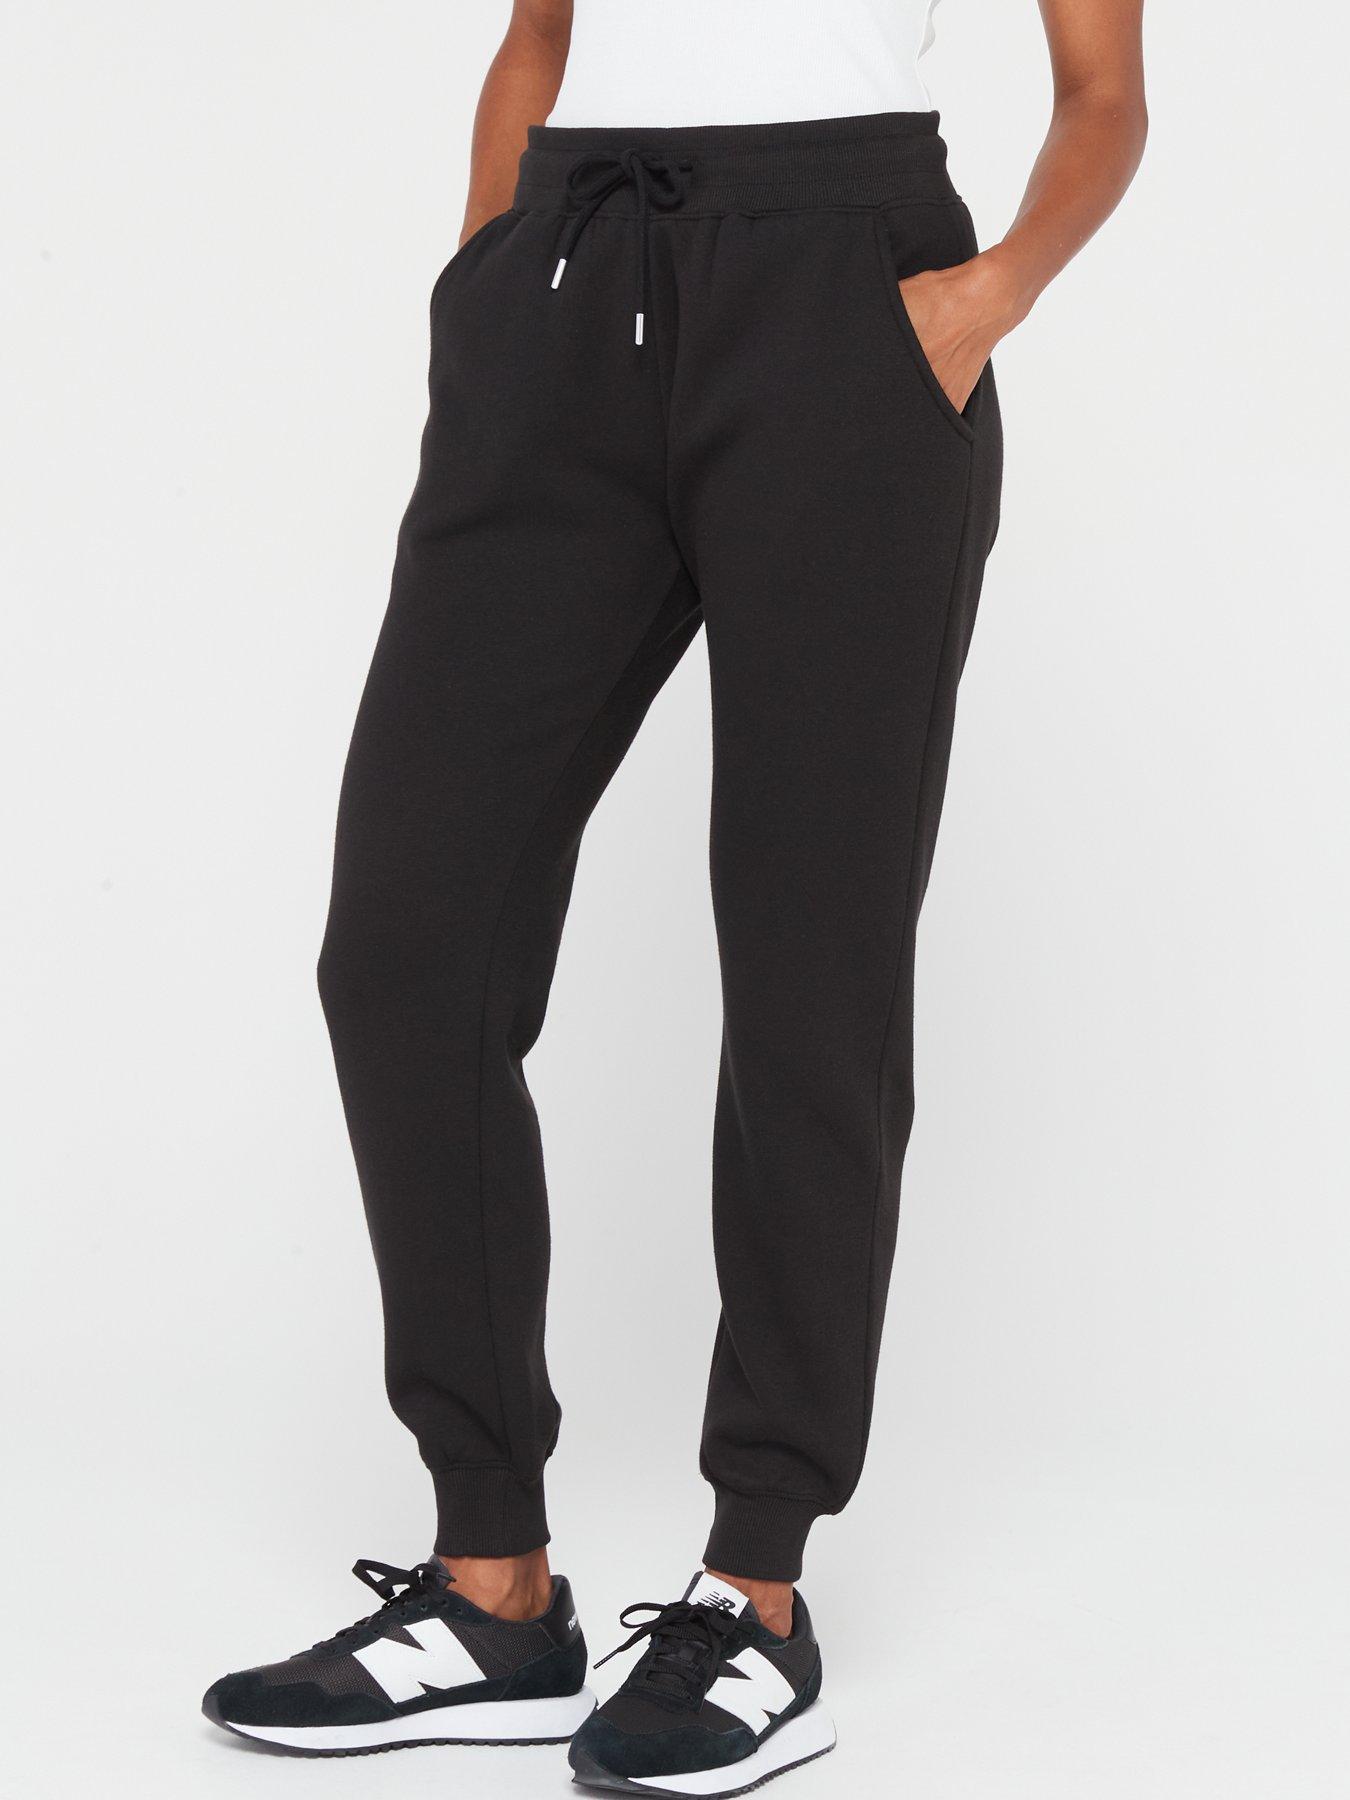 Black, Jogging Bottoms, Trousers & leggings, Women